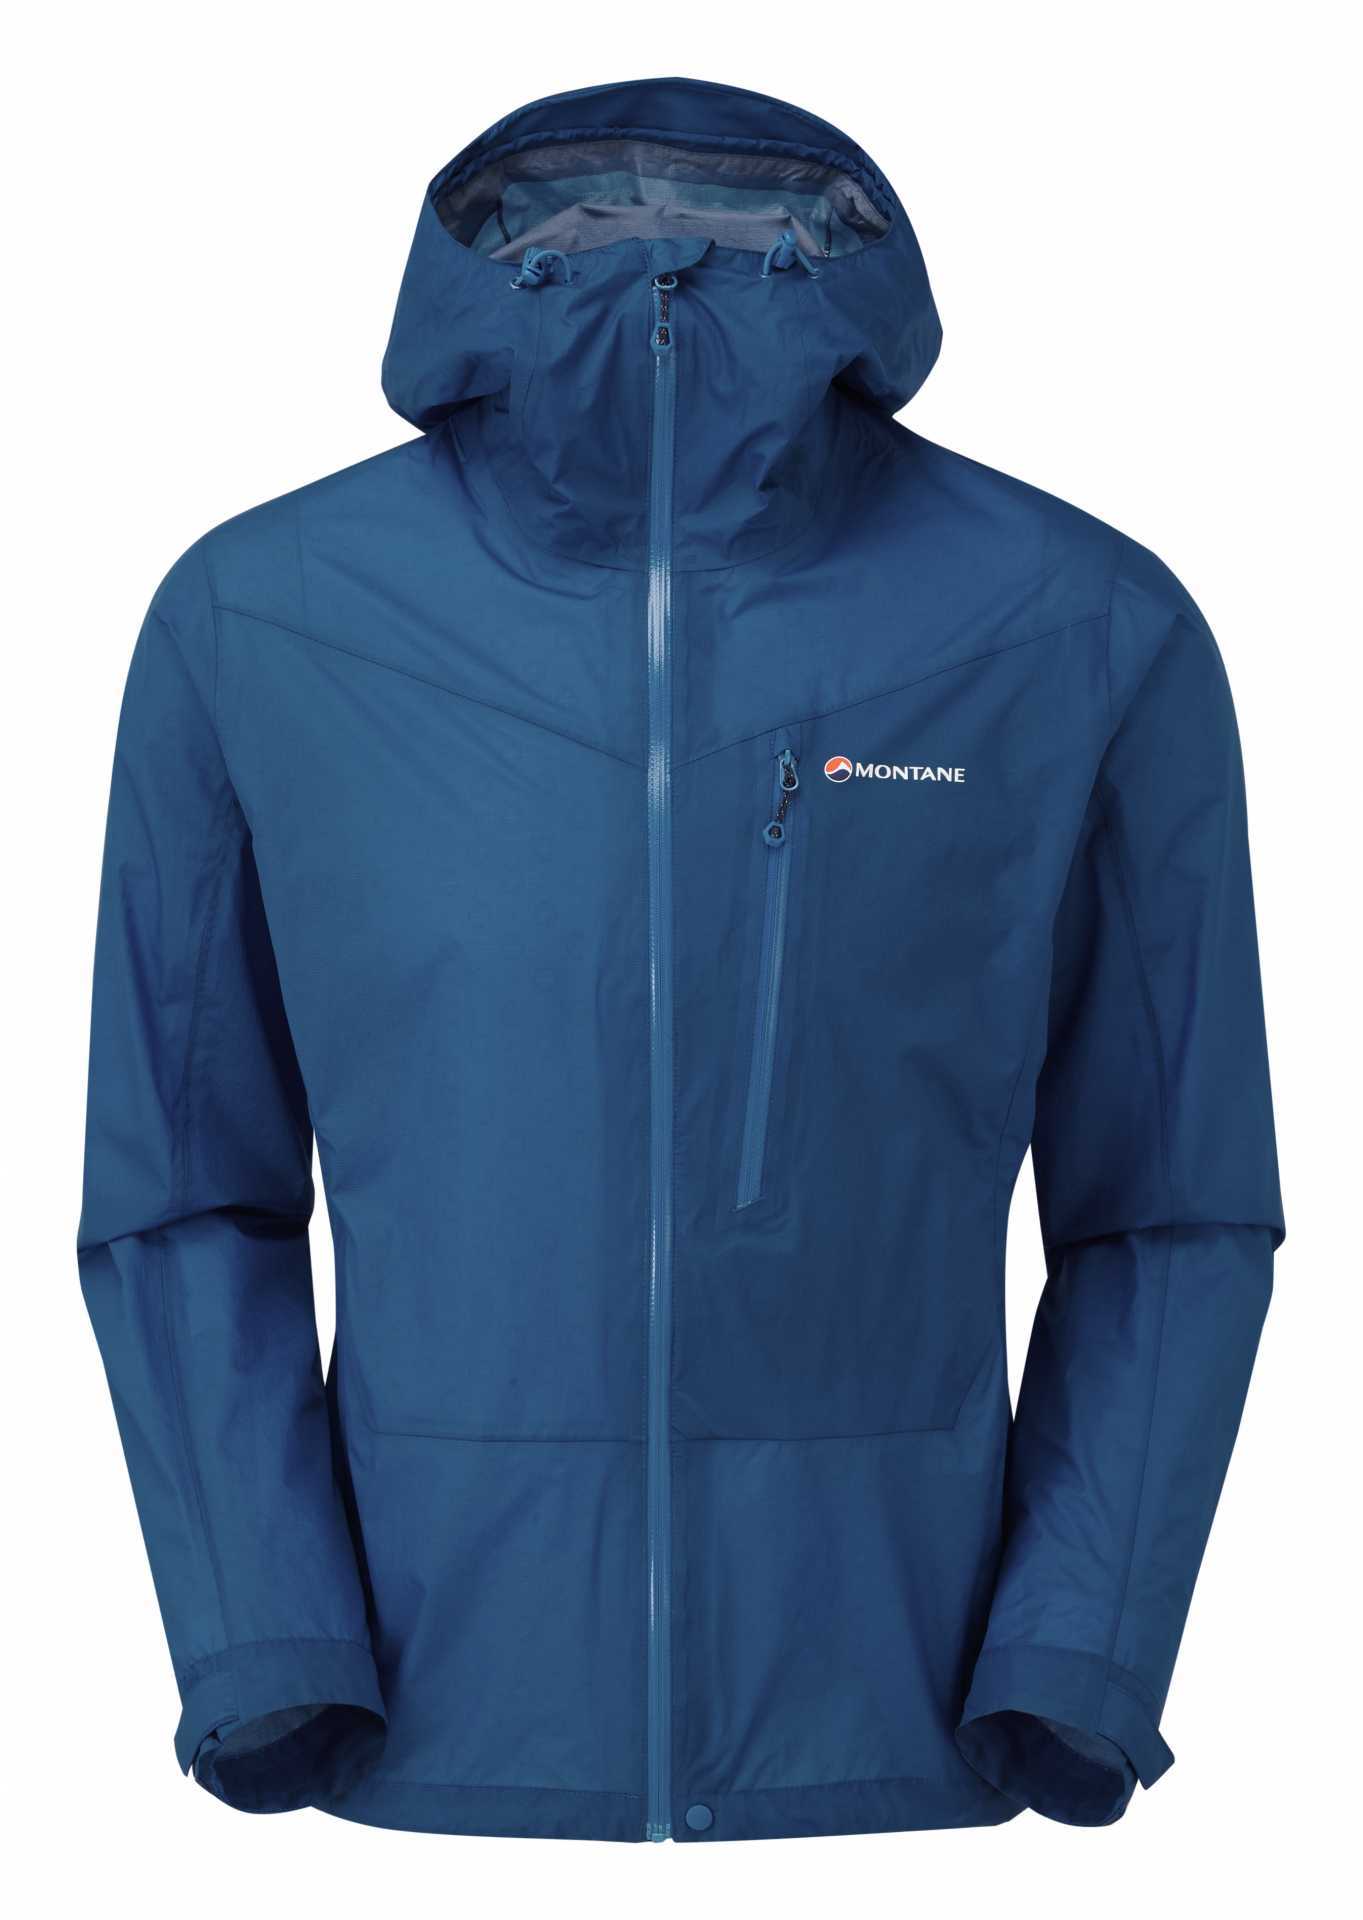 Best camping equipment: Montane Minimus Jacket in blue